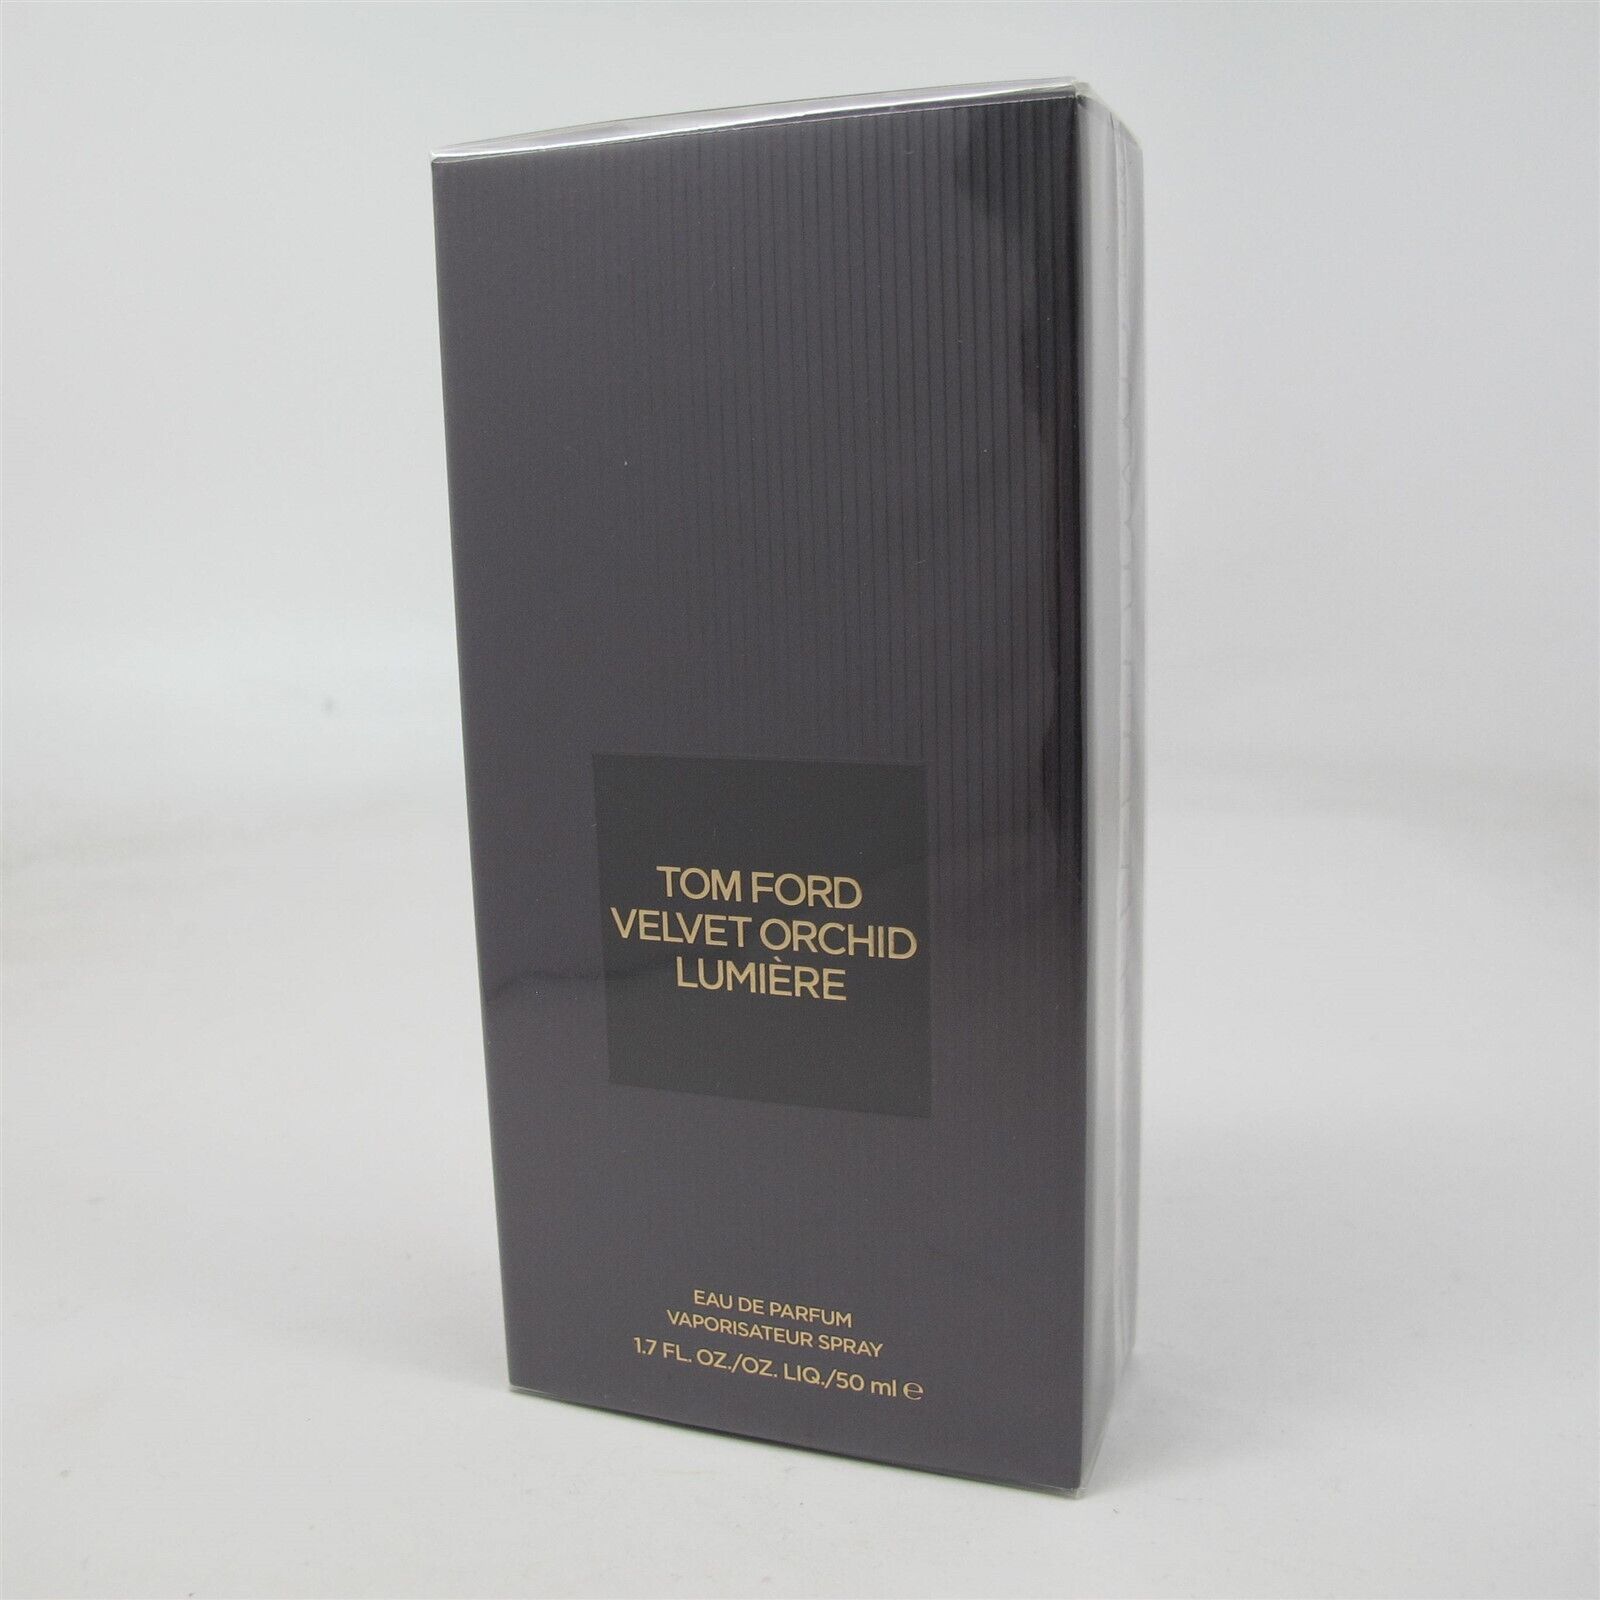 VELVET ORCHID LUMIERE by Tom Ford 50 ml/ 1.7 oz Eau de Parfum Spray NIB - $118.79